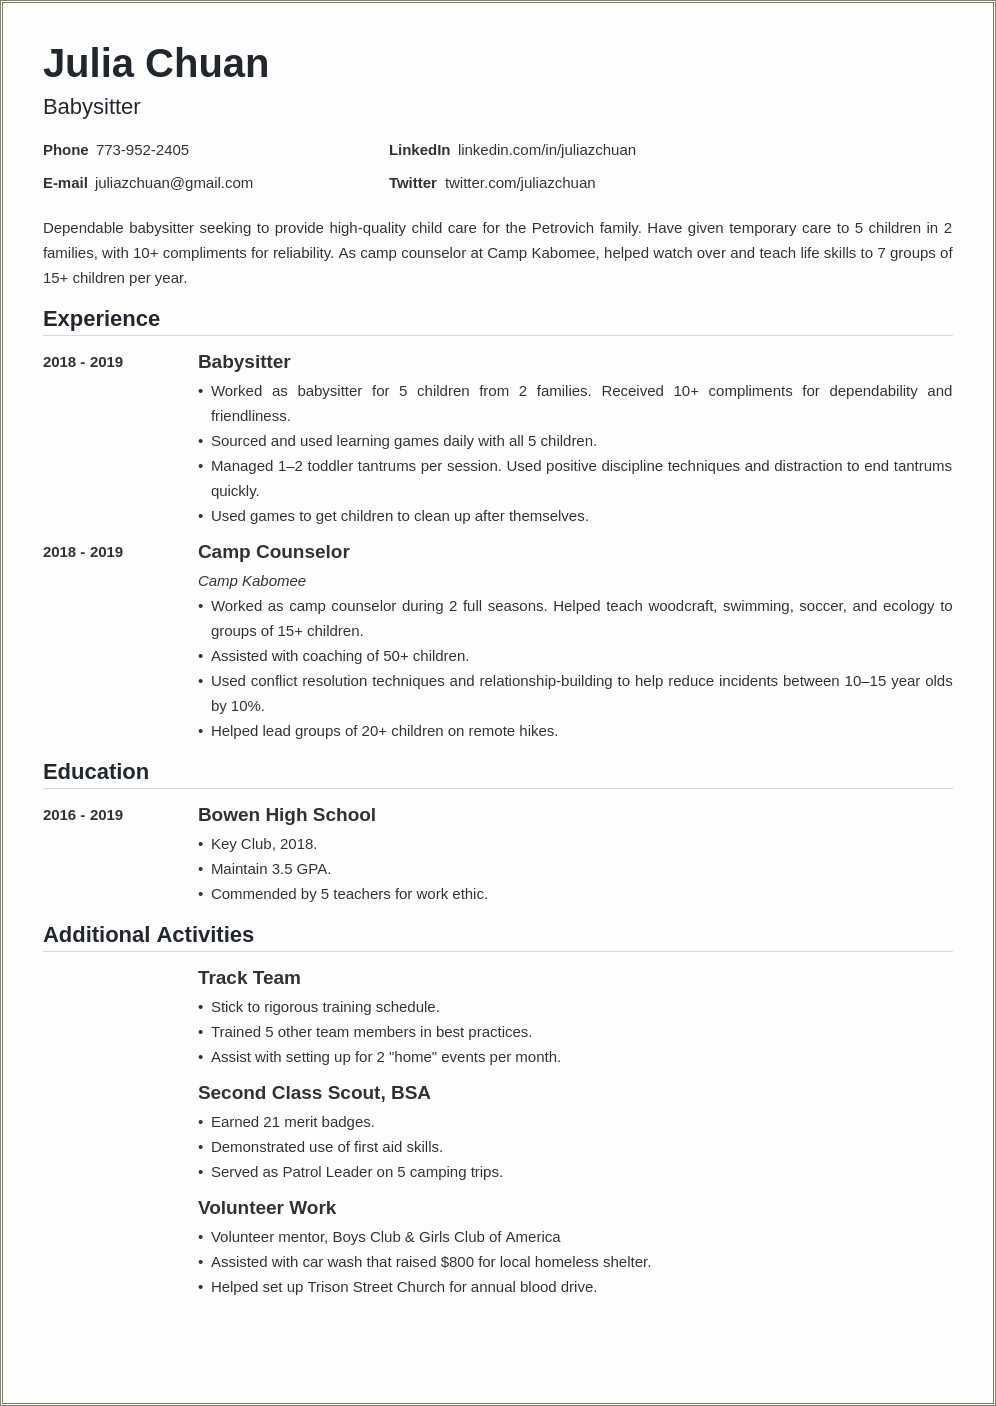 Put Volunteer Expeirence Job Resume